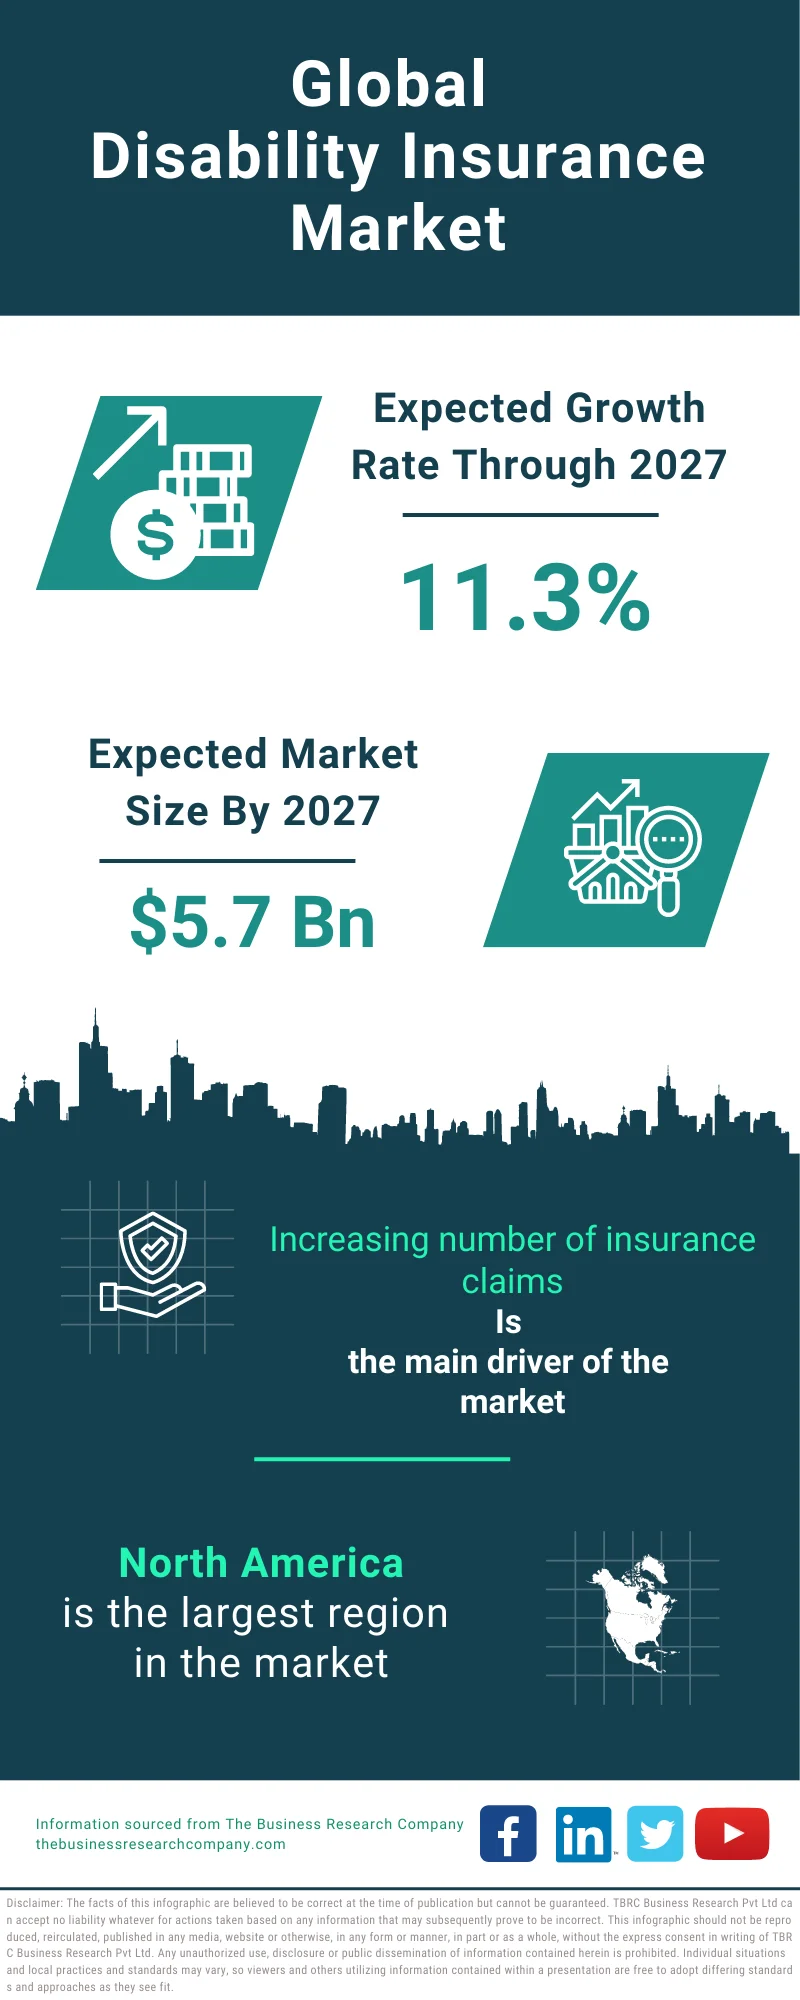 Disability Insurance Global Market Report 2023